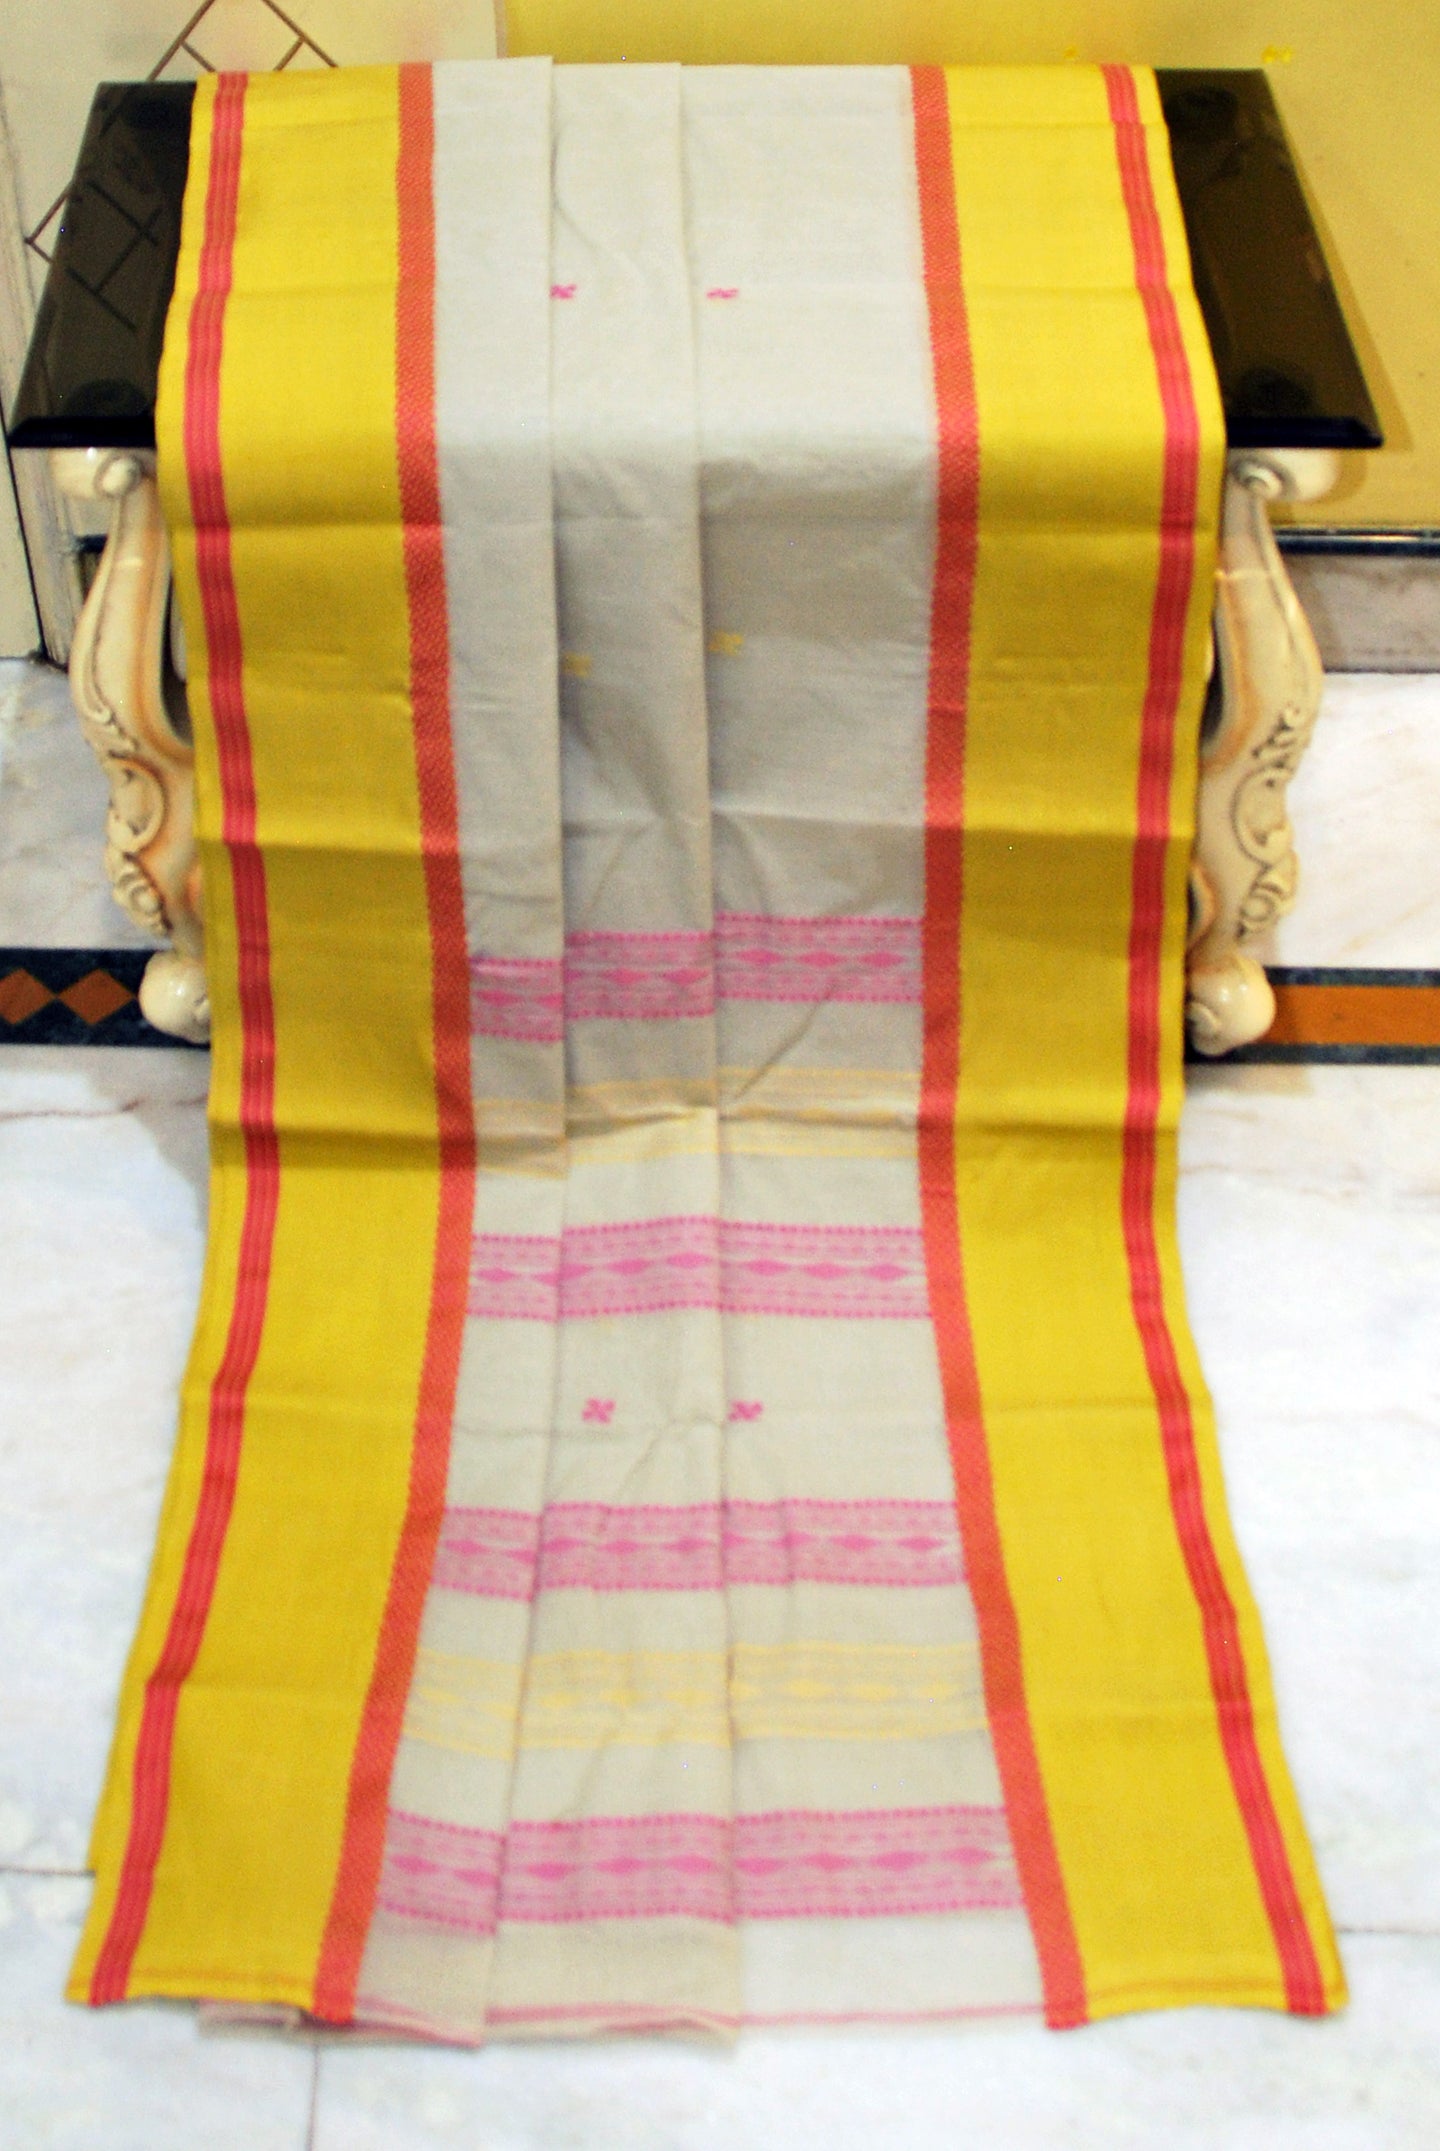 Woven Matta Nakshi Border Premium Quality Bengal Handloom Cotton Saree in Atrium White, Red and Lime Yellow Green